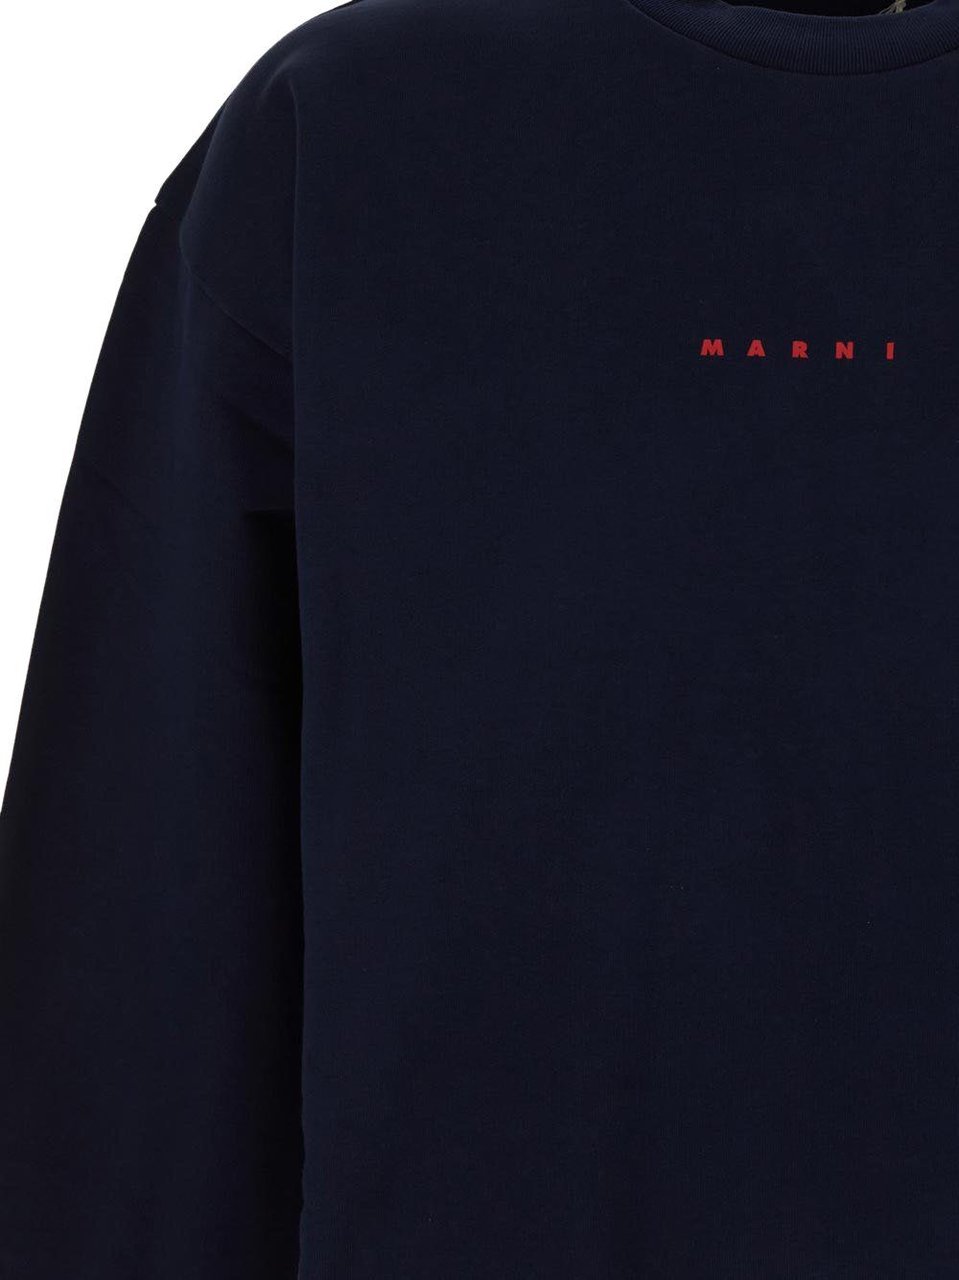 Marni Logo Sweatshirt Blauw